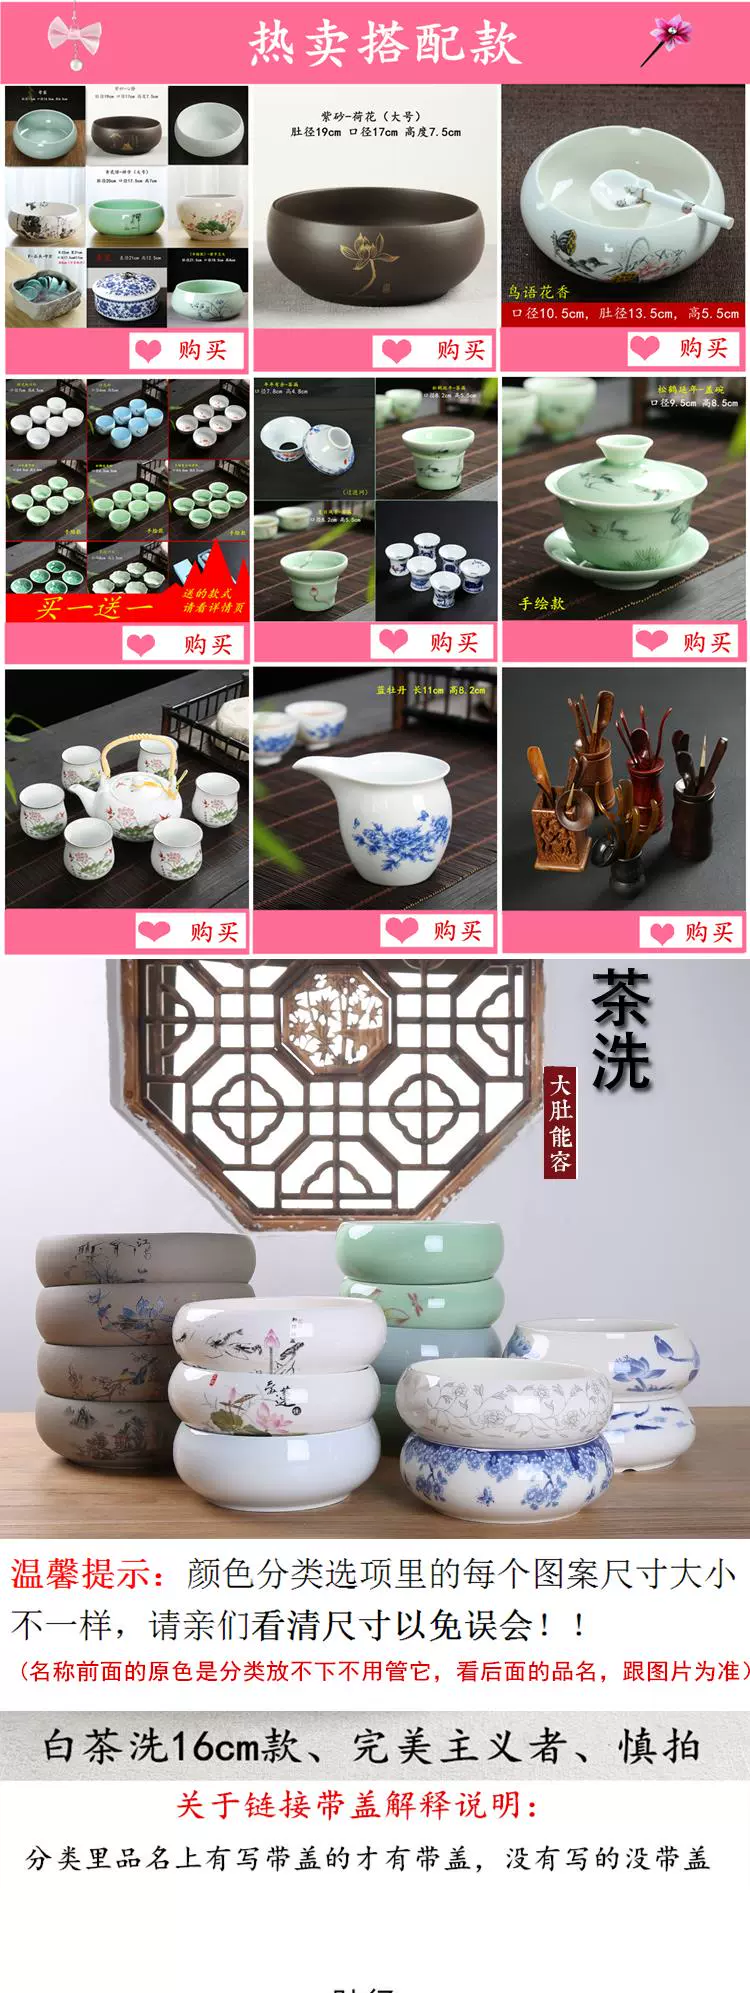 Tea pot large ceramic bowl Tea Tea is Tea wash bowl washing utensils kunfu Tea wash to wash cup of cup